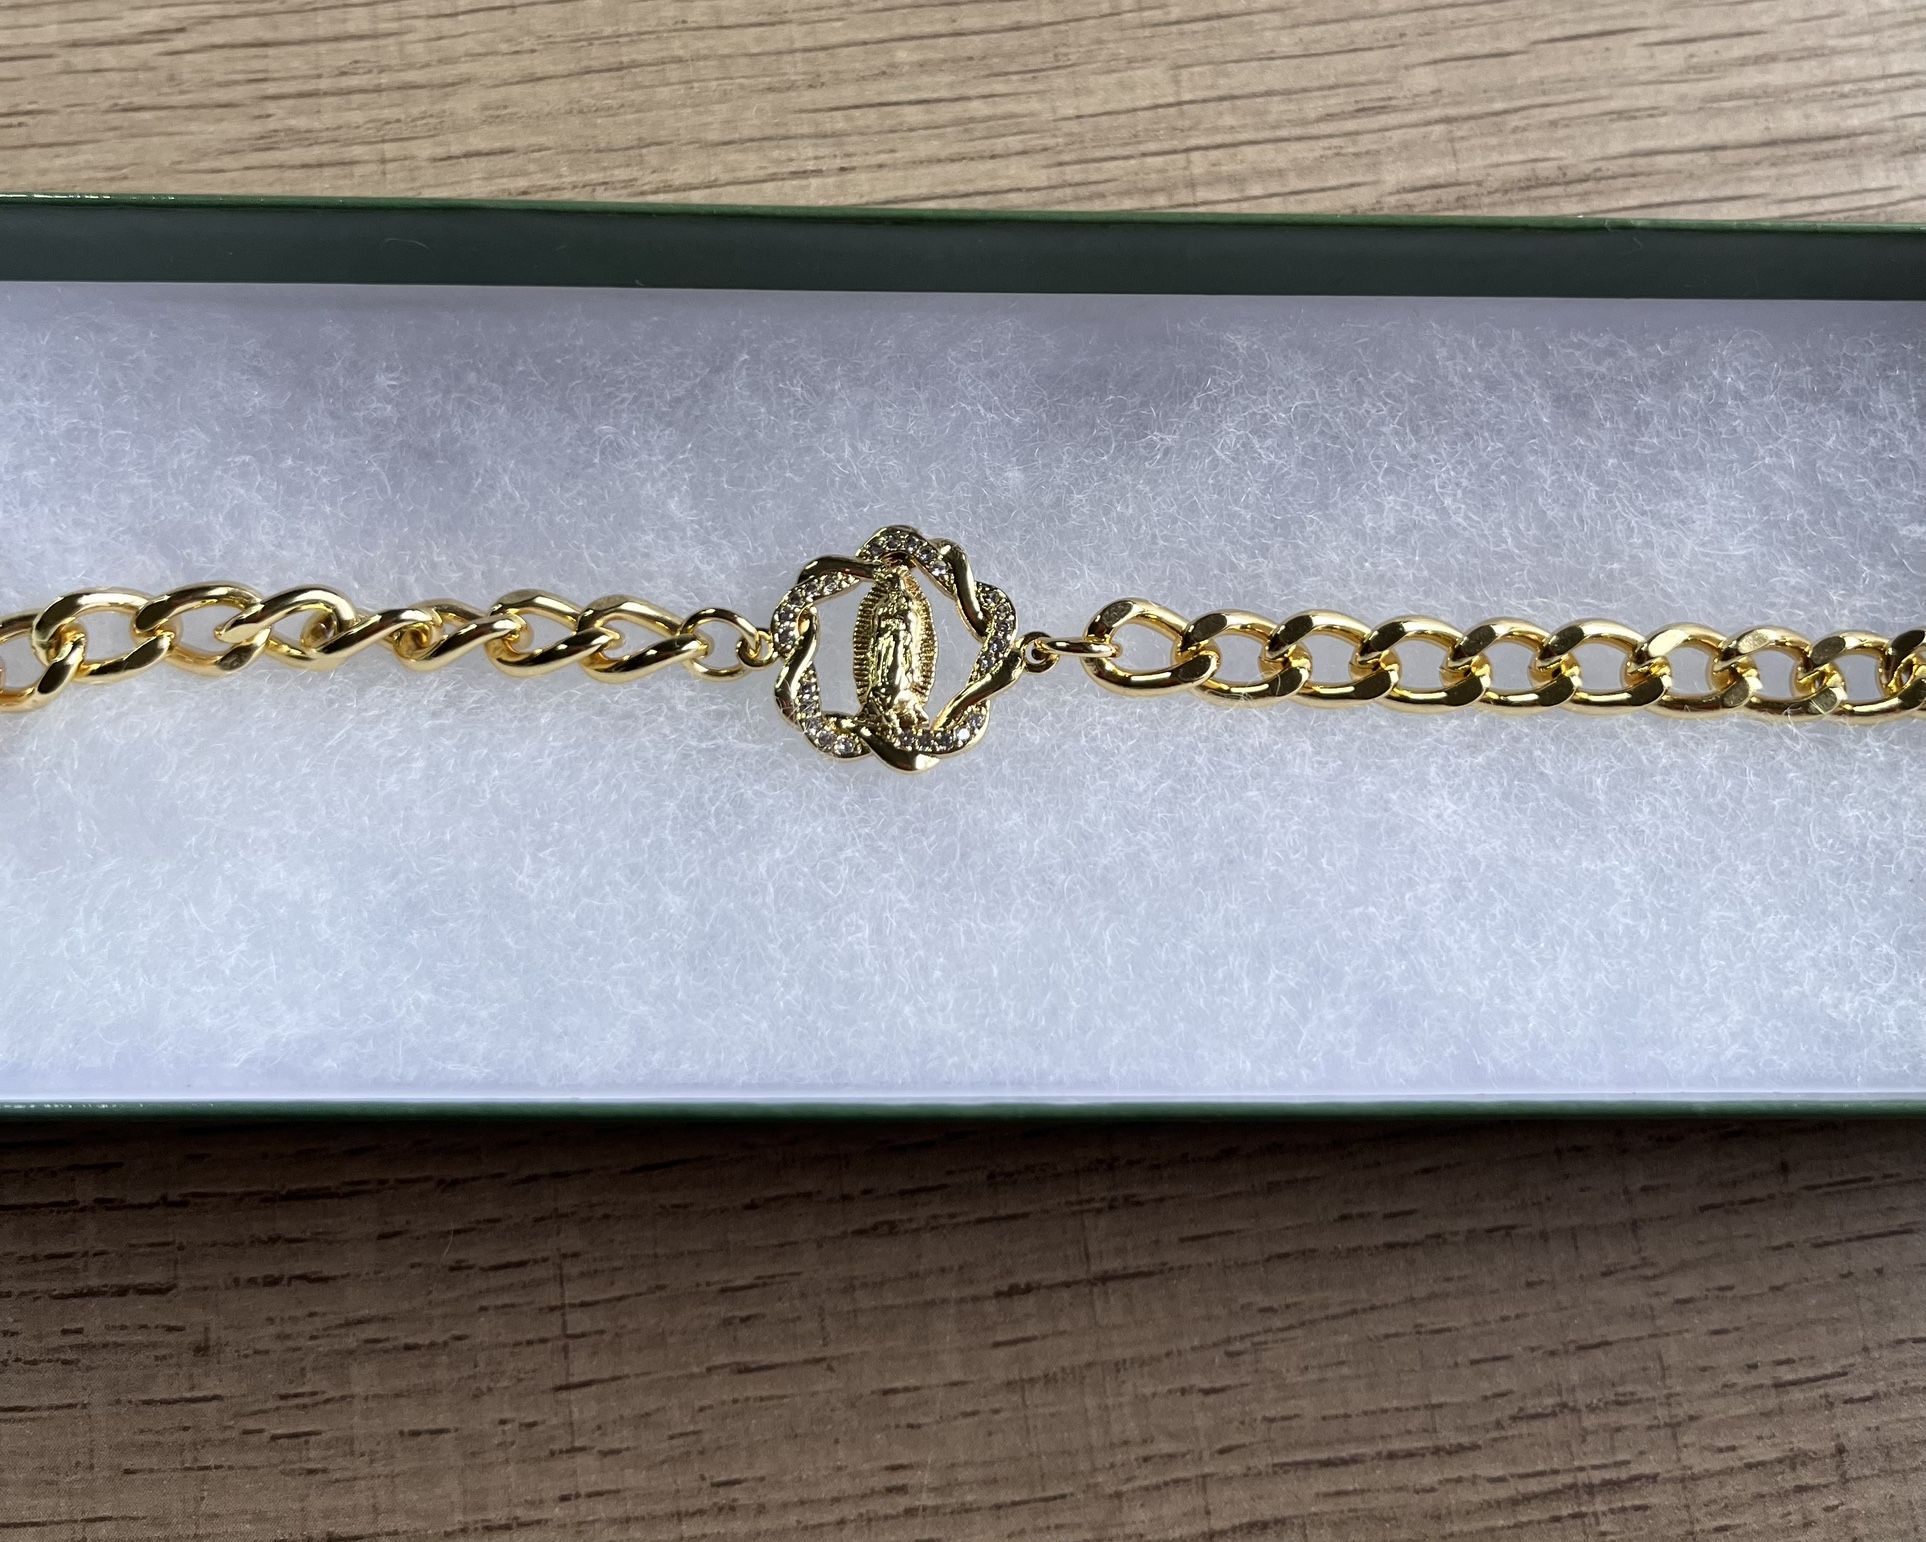 Virgin Gold Plated Bracelet 